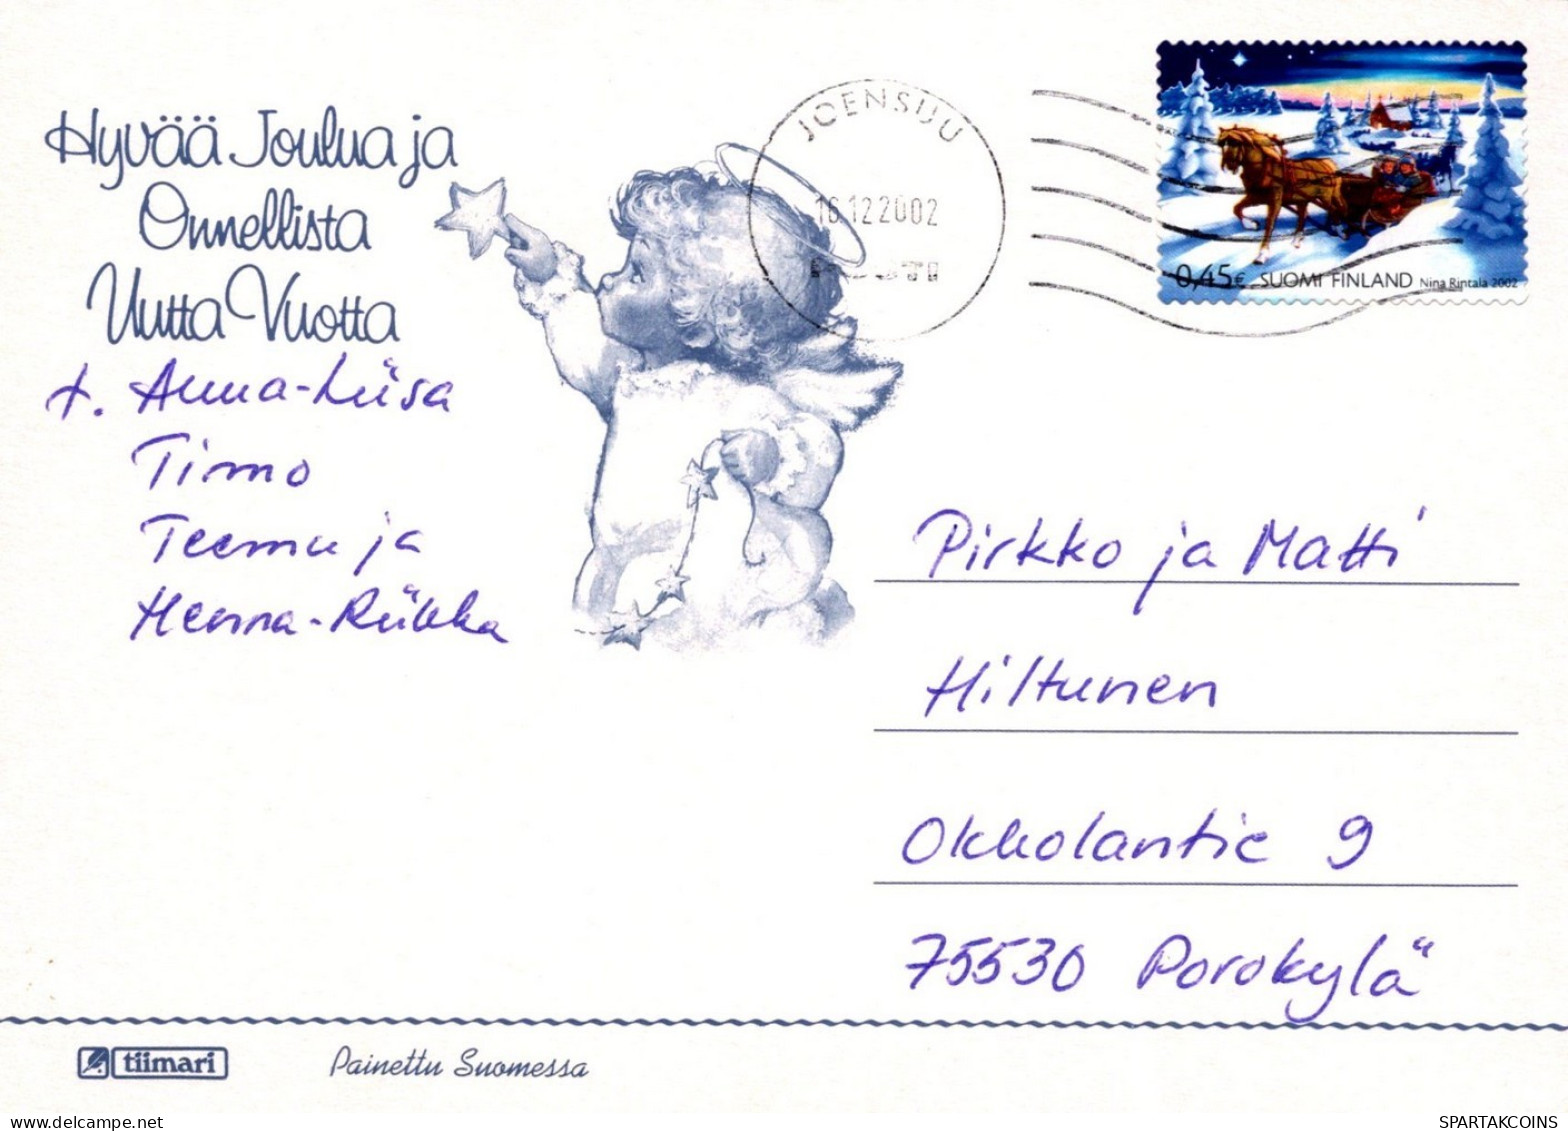 ANGE NOËL Vintage Carte Postale CPSM #PAH461.FR - Angeli